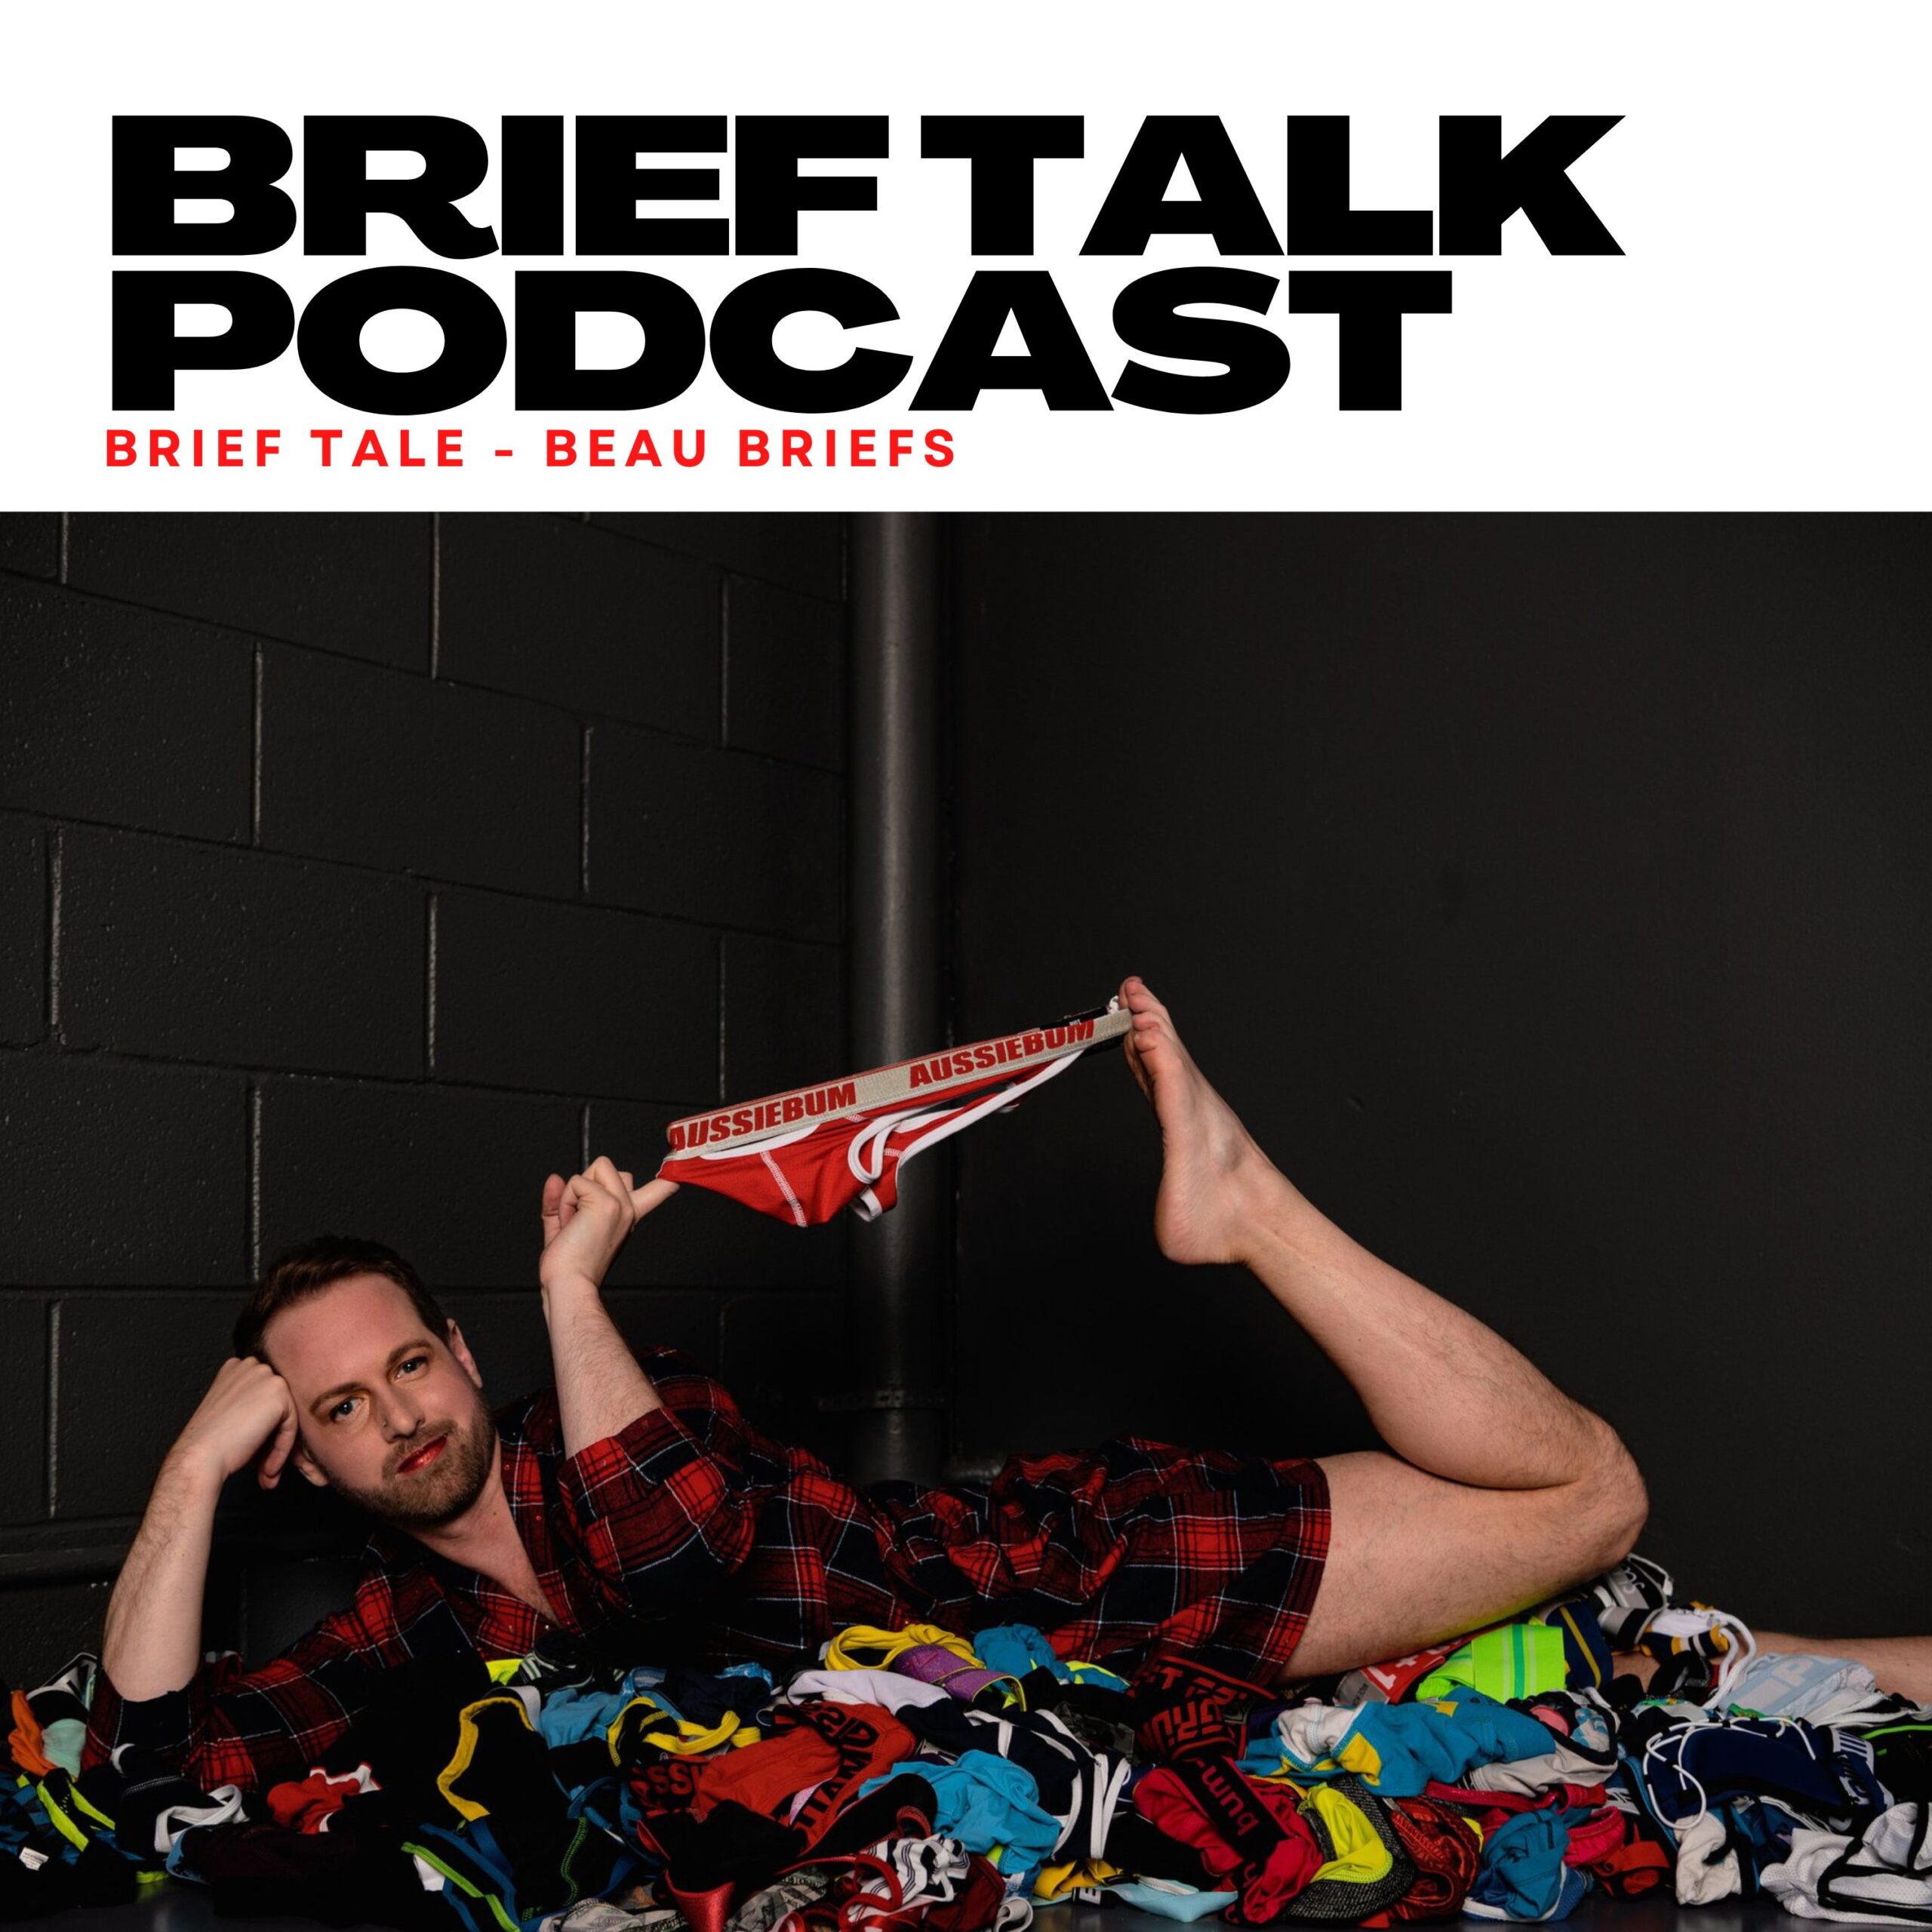 Brief Talk Podcast – Brief Tale – Beau Briefs